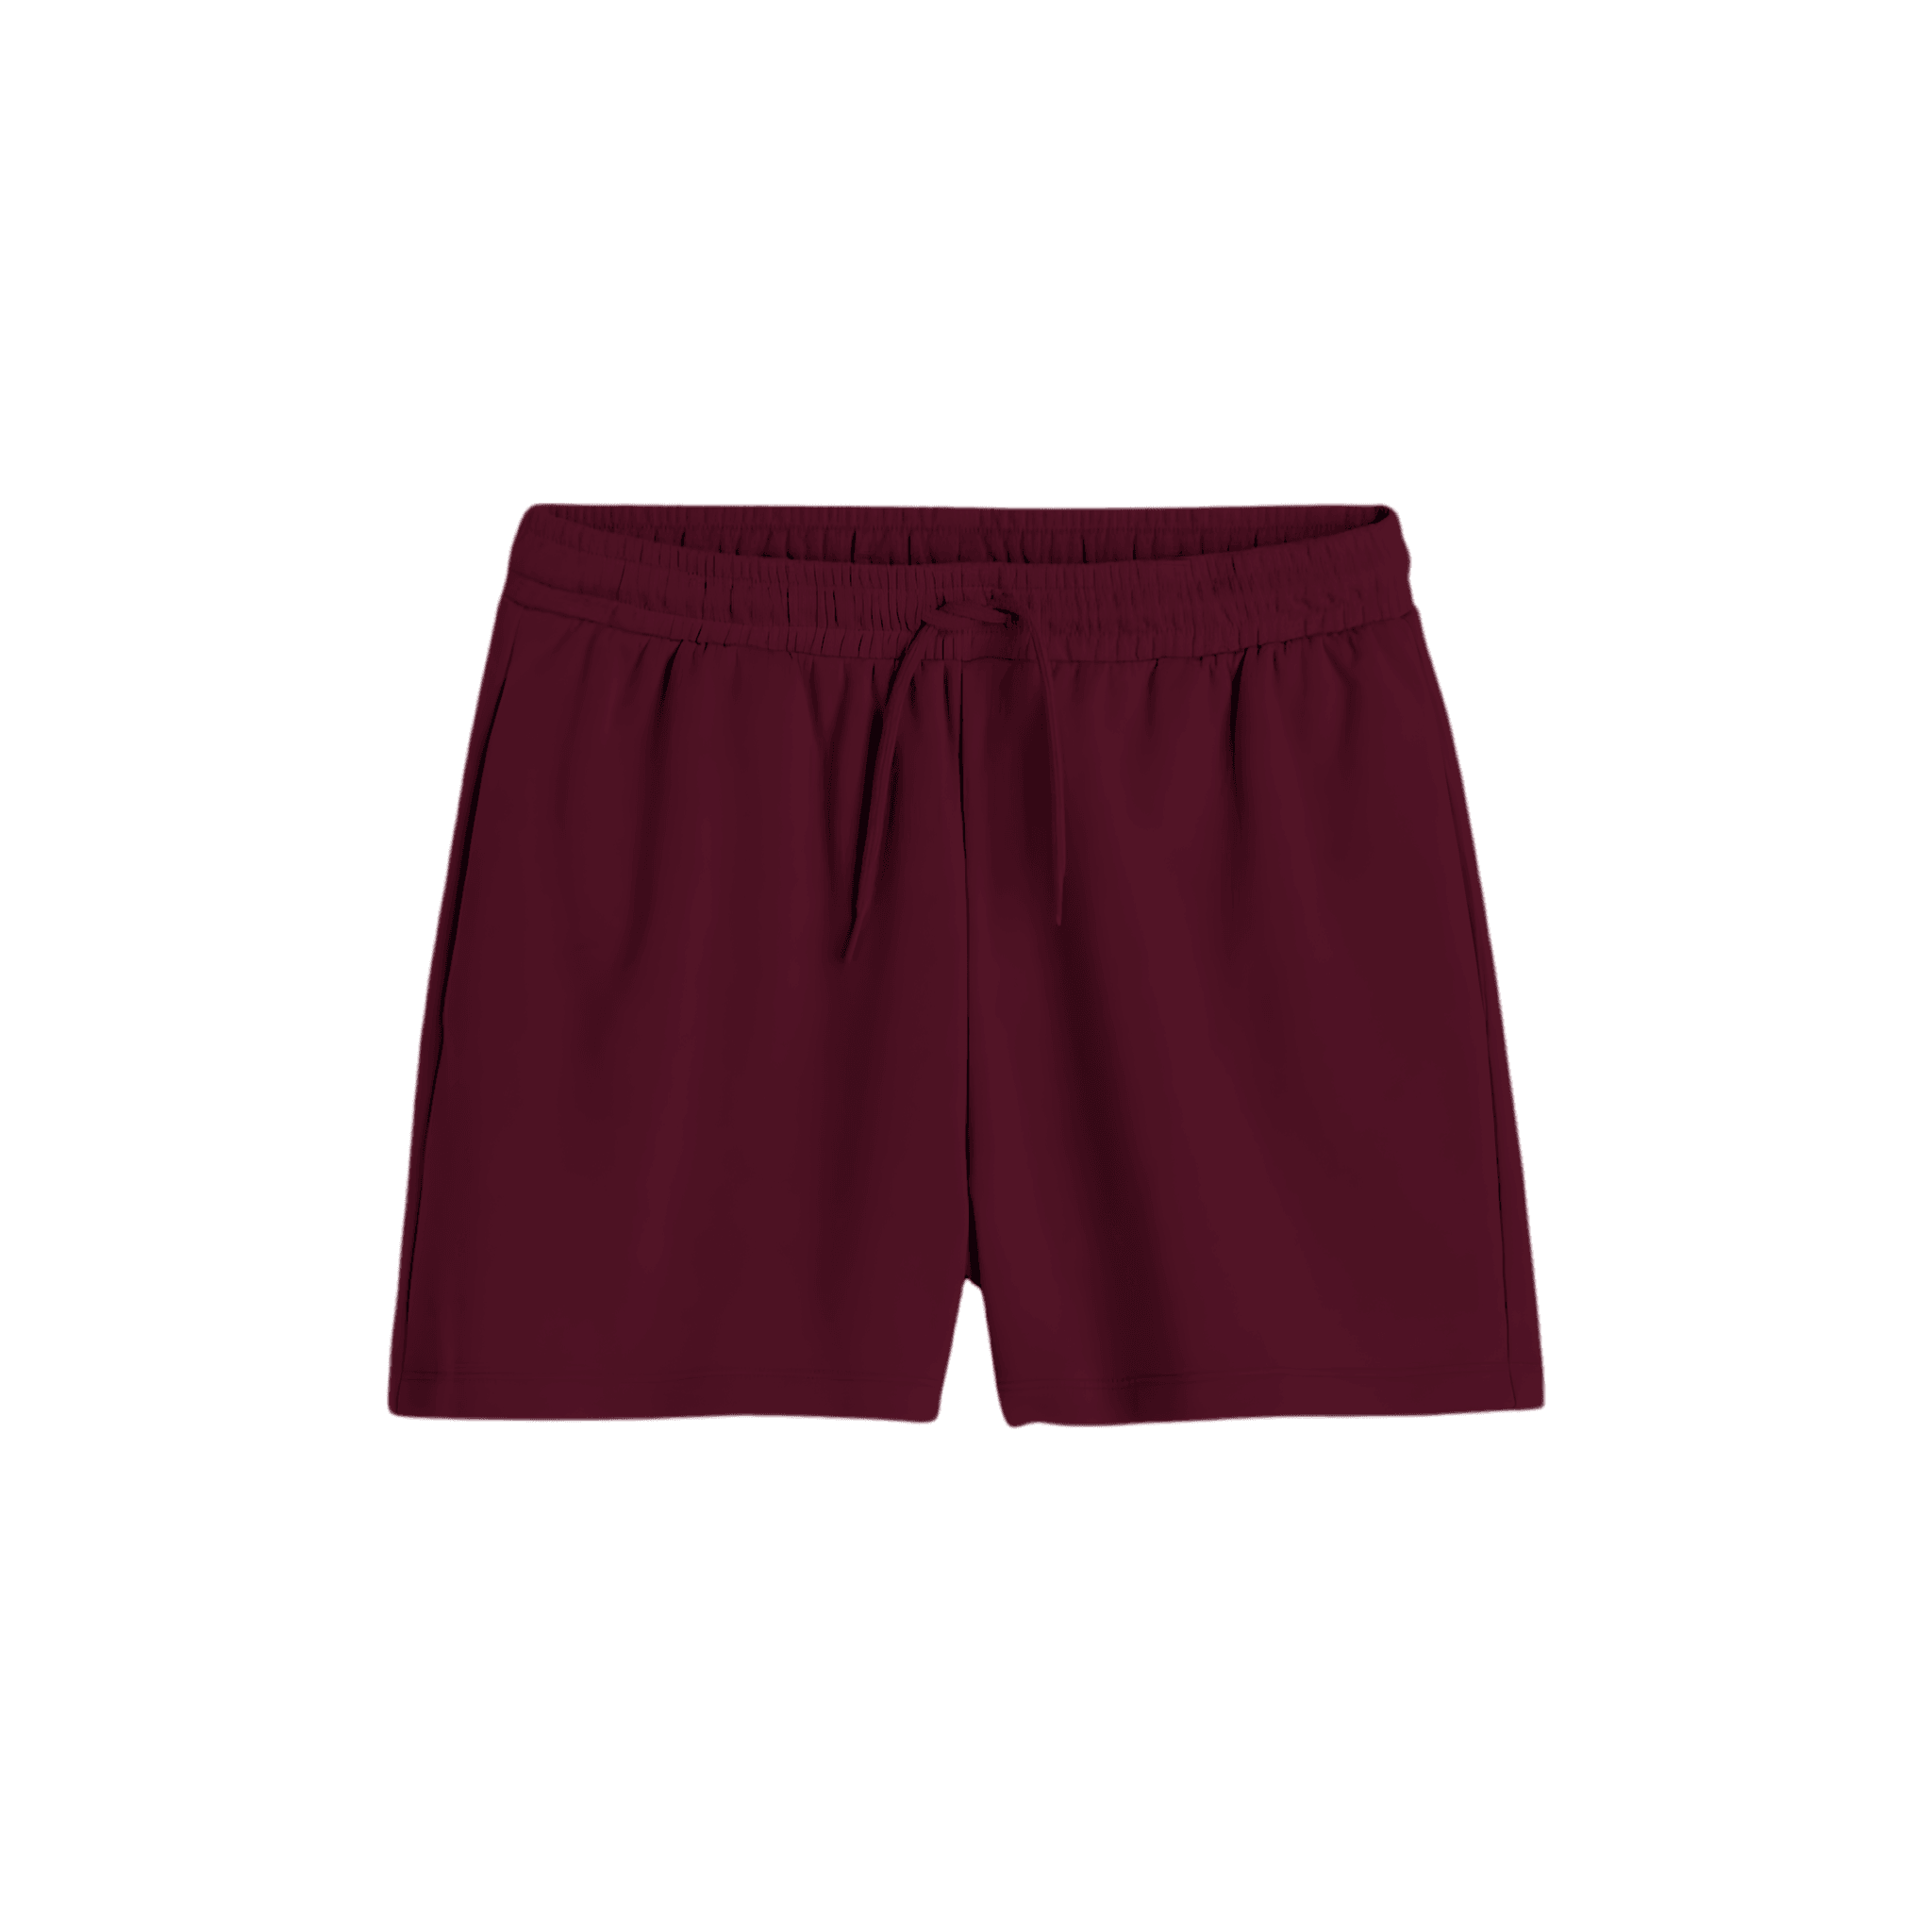 BURGUNDY shorts